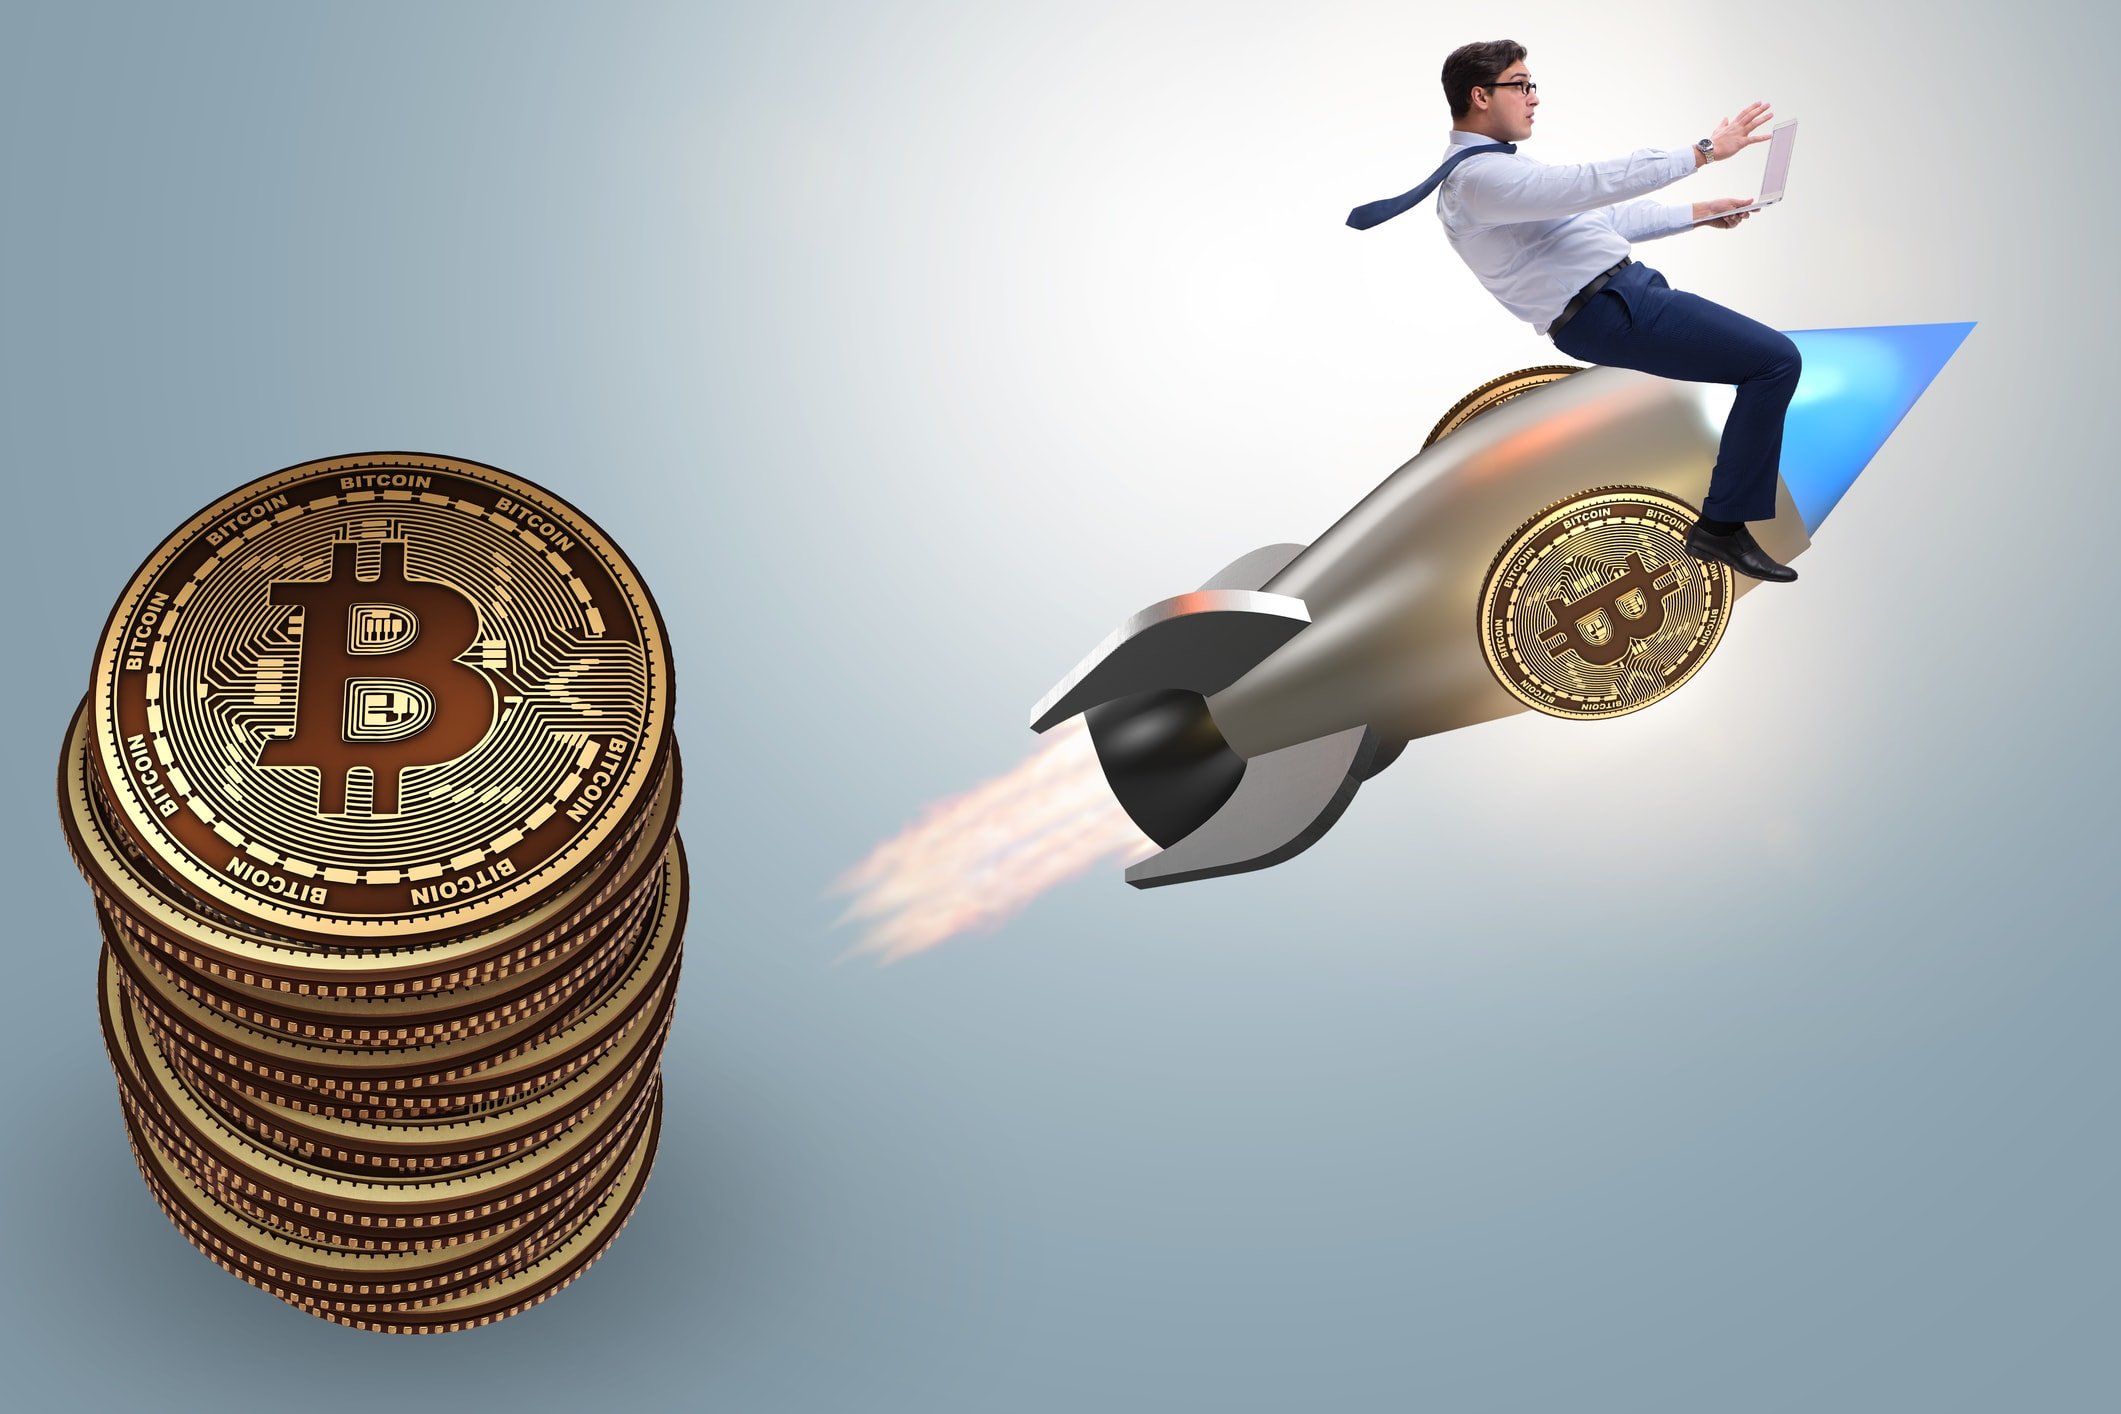 Moon Capital: the price of bitcoin will reach 98 million